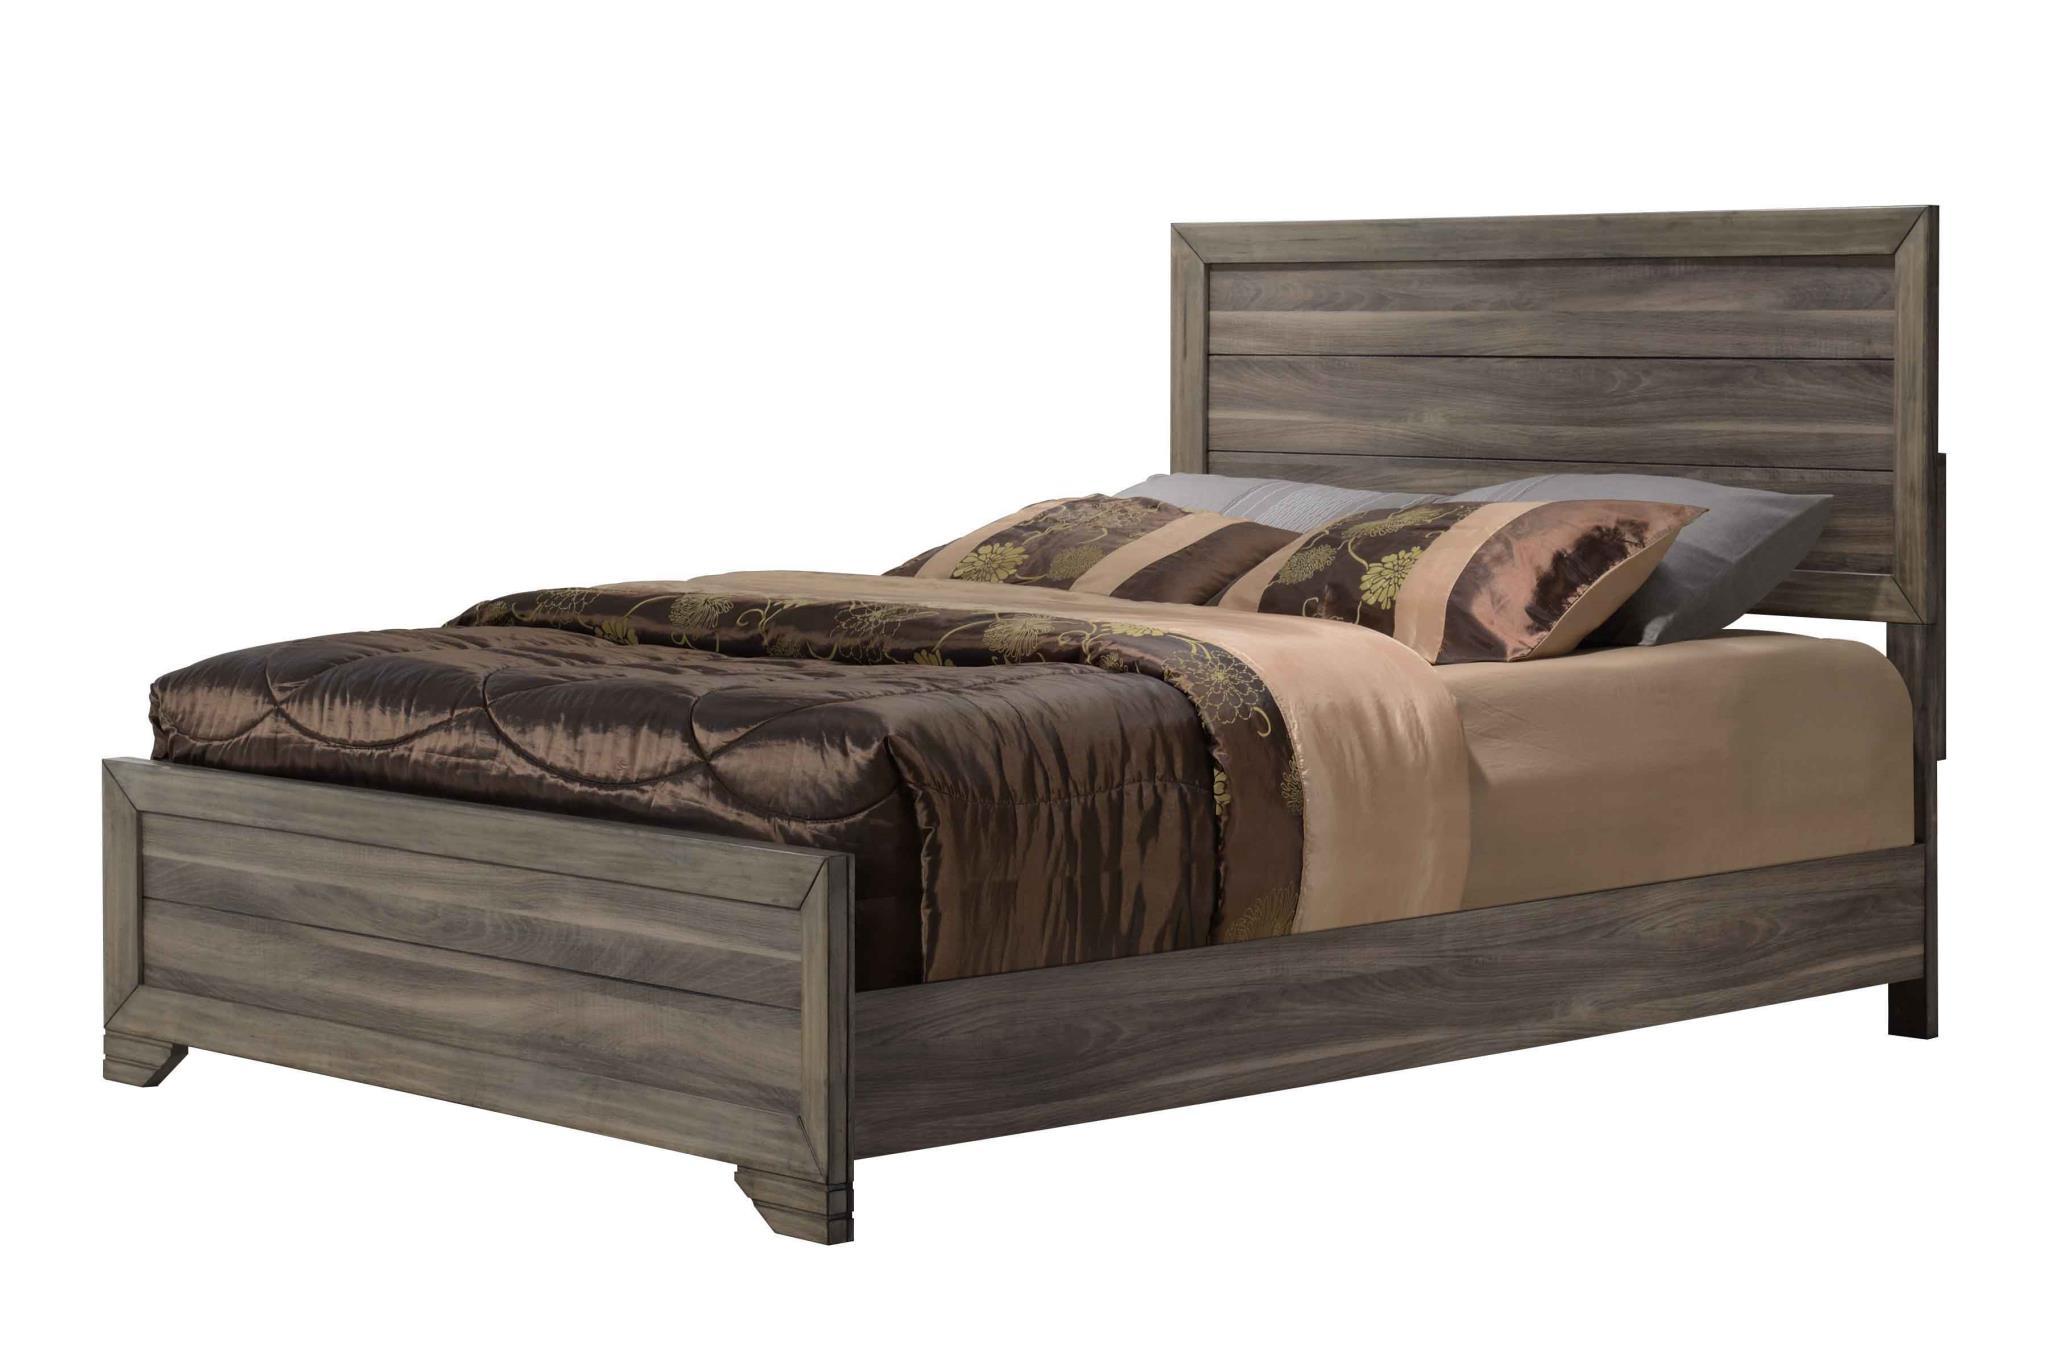 

    
Driftwood 1651 King Bedroom Set 4Pcs Asheville Bernards Solid Wood Contemporary
